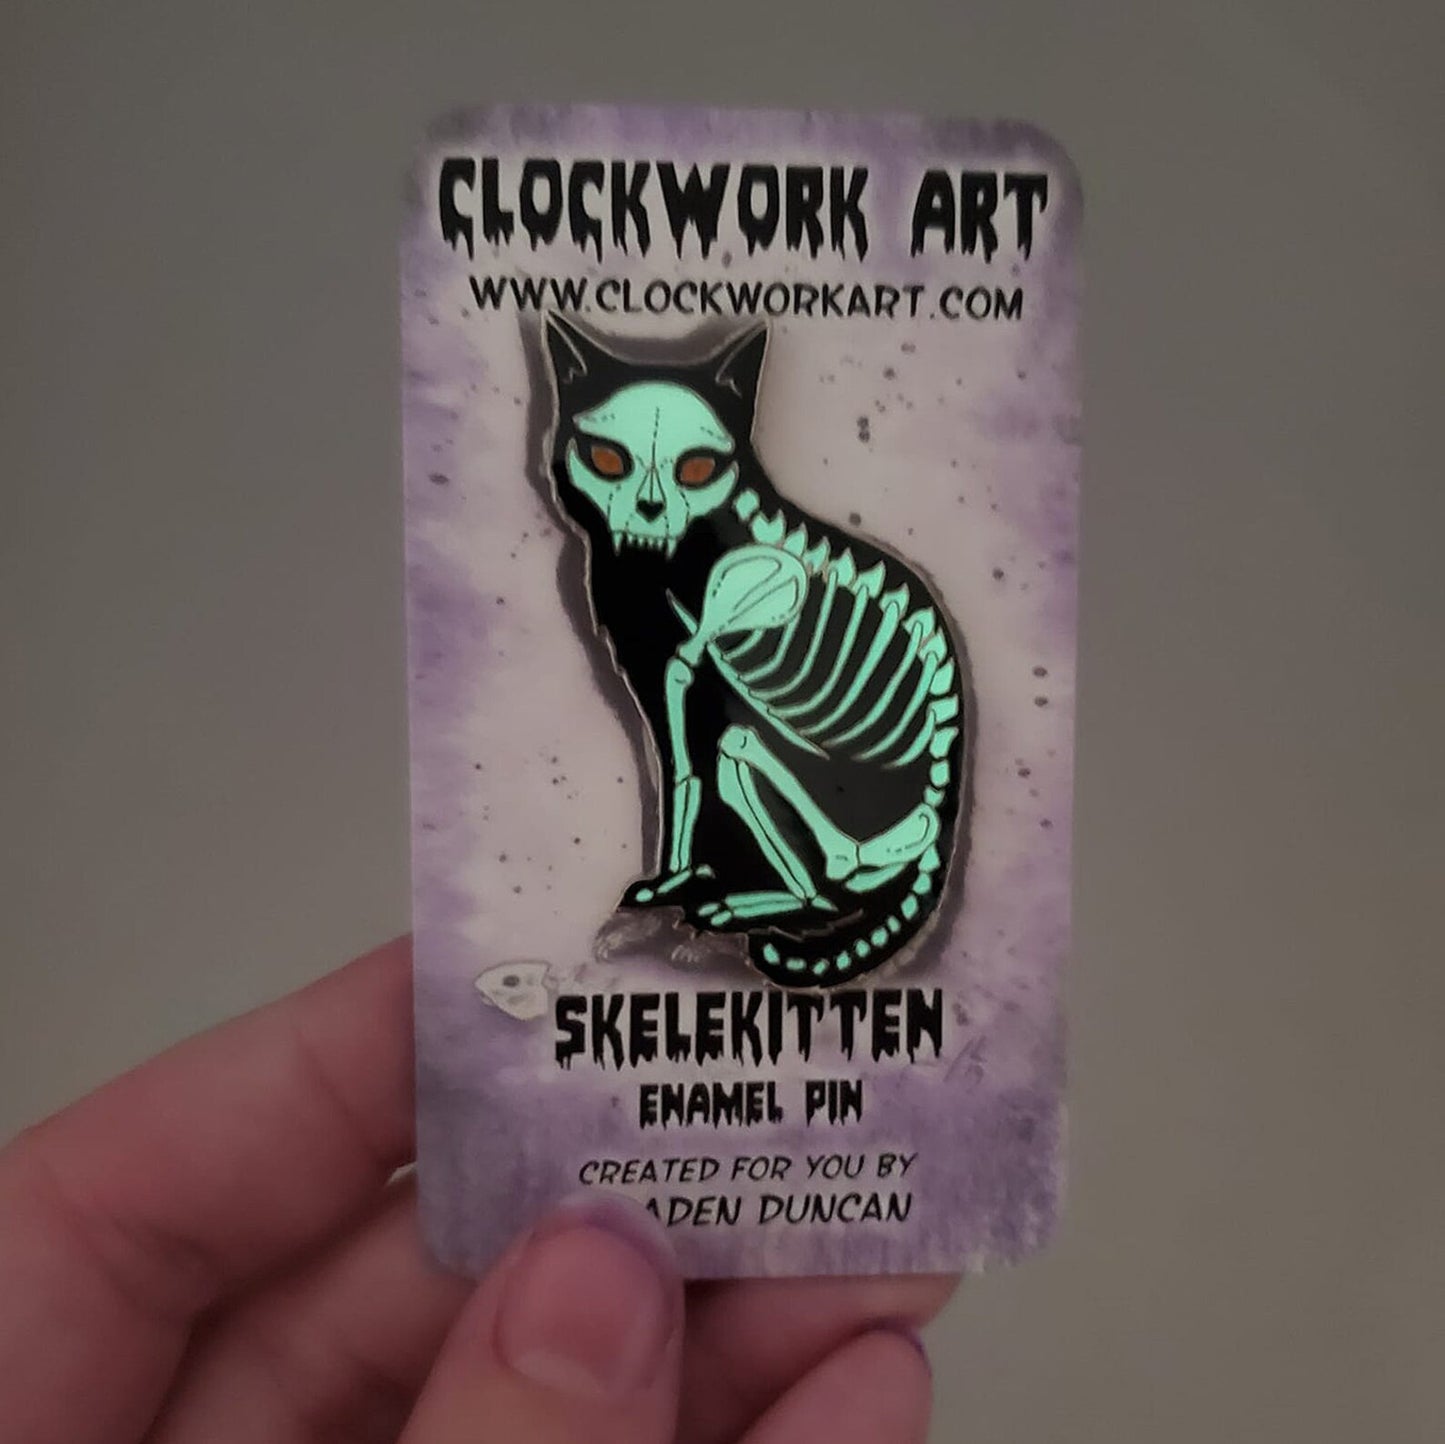 Clockwork Art "Skelekitten" Glow in the Dark Enamel Pin